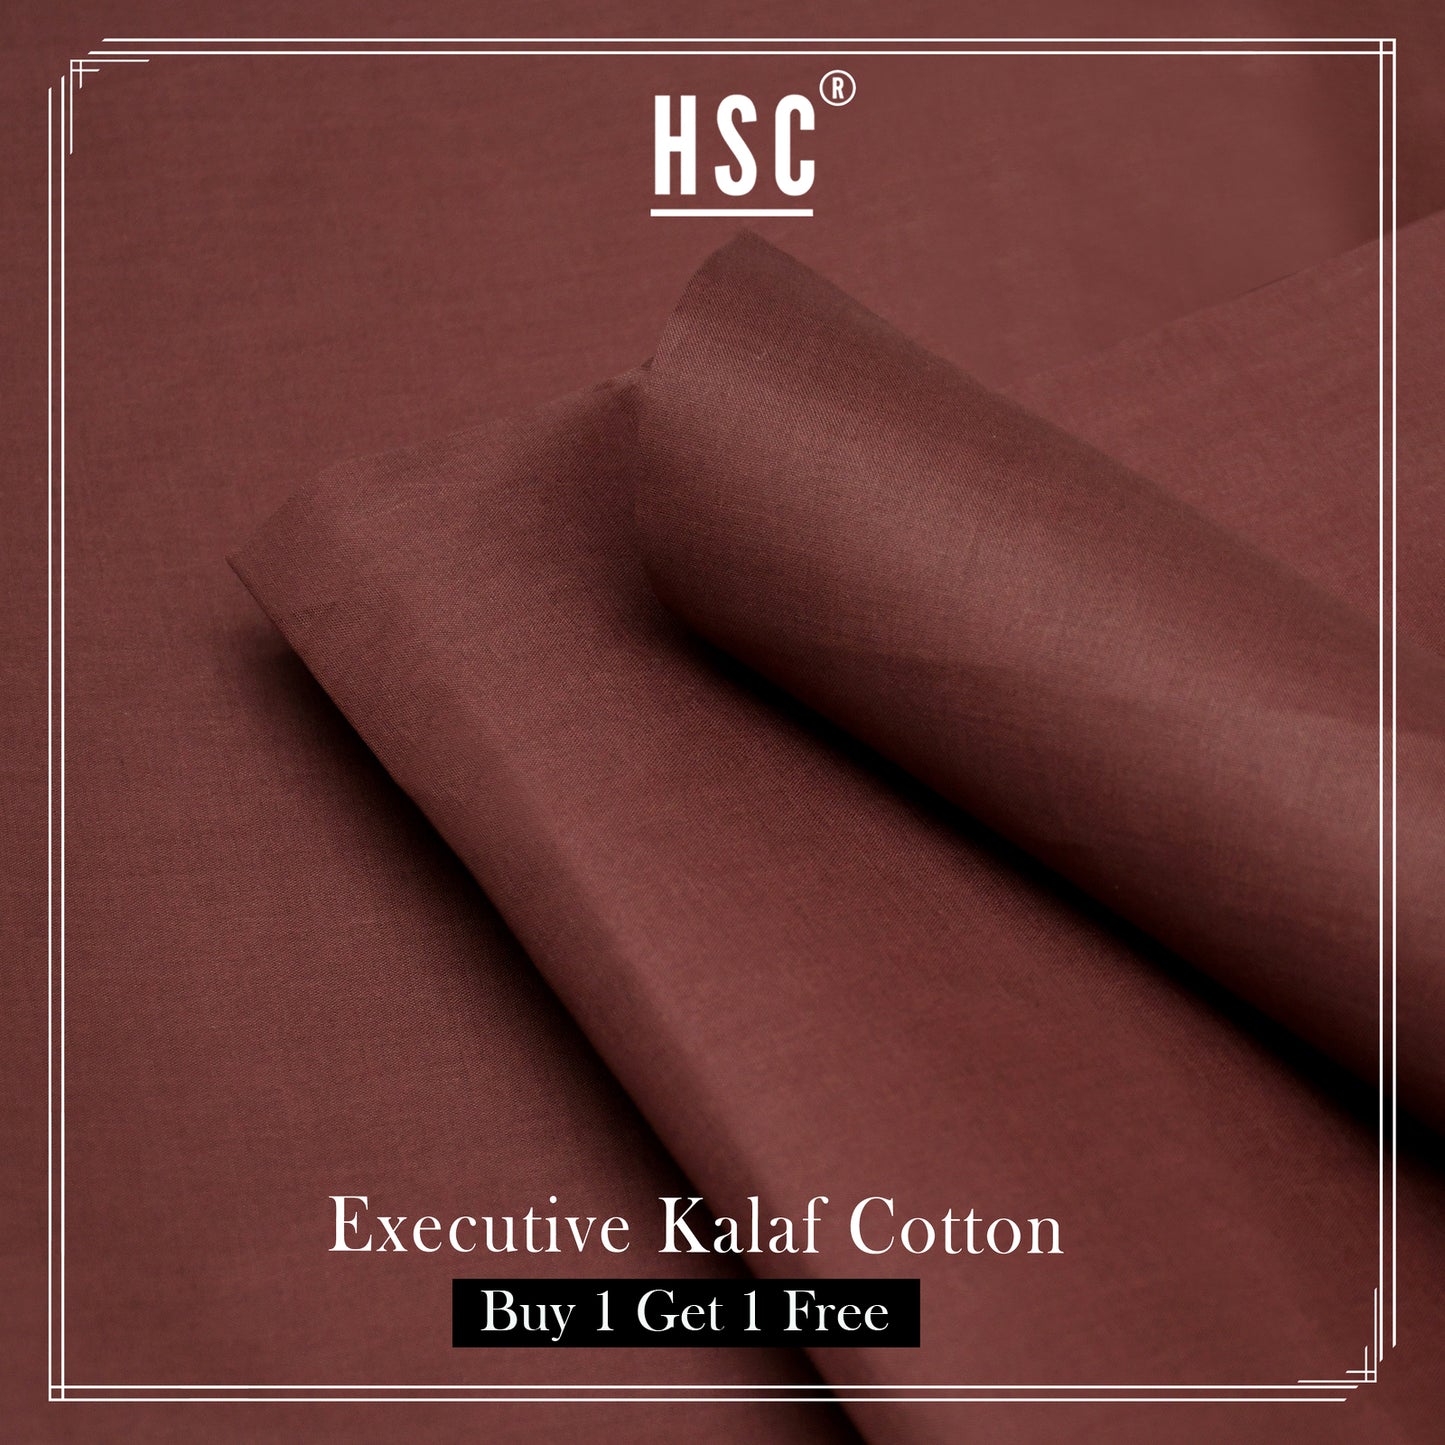 Executive Kalaf Cotton Buy 1 Get 1 Free Offer! - EKC25 100% Cotton